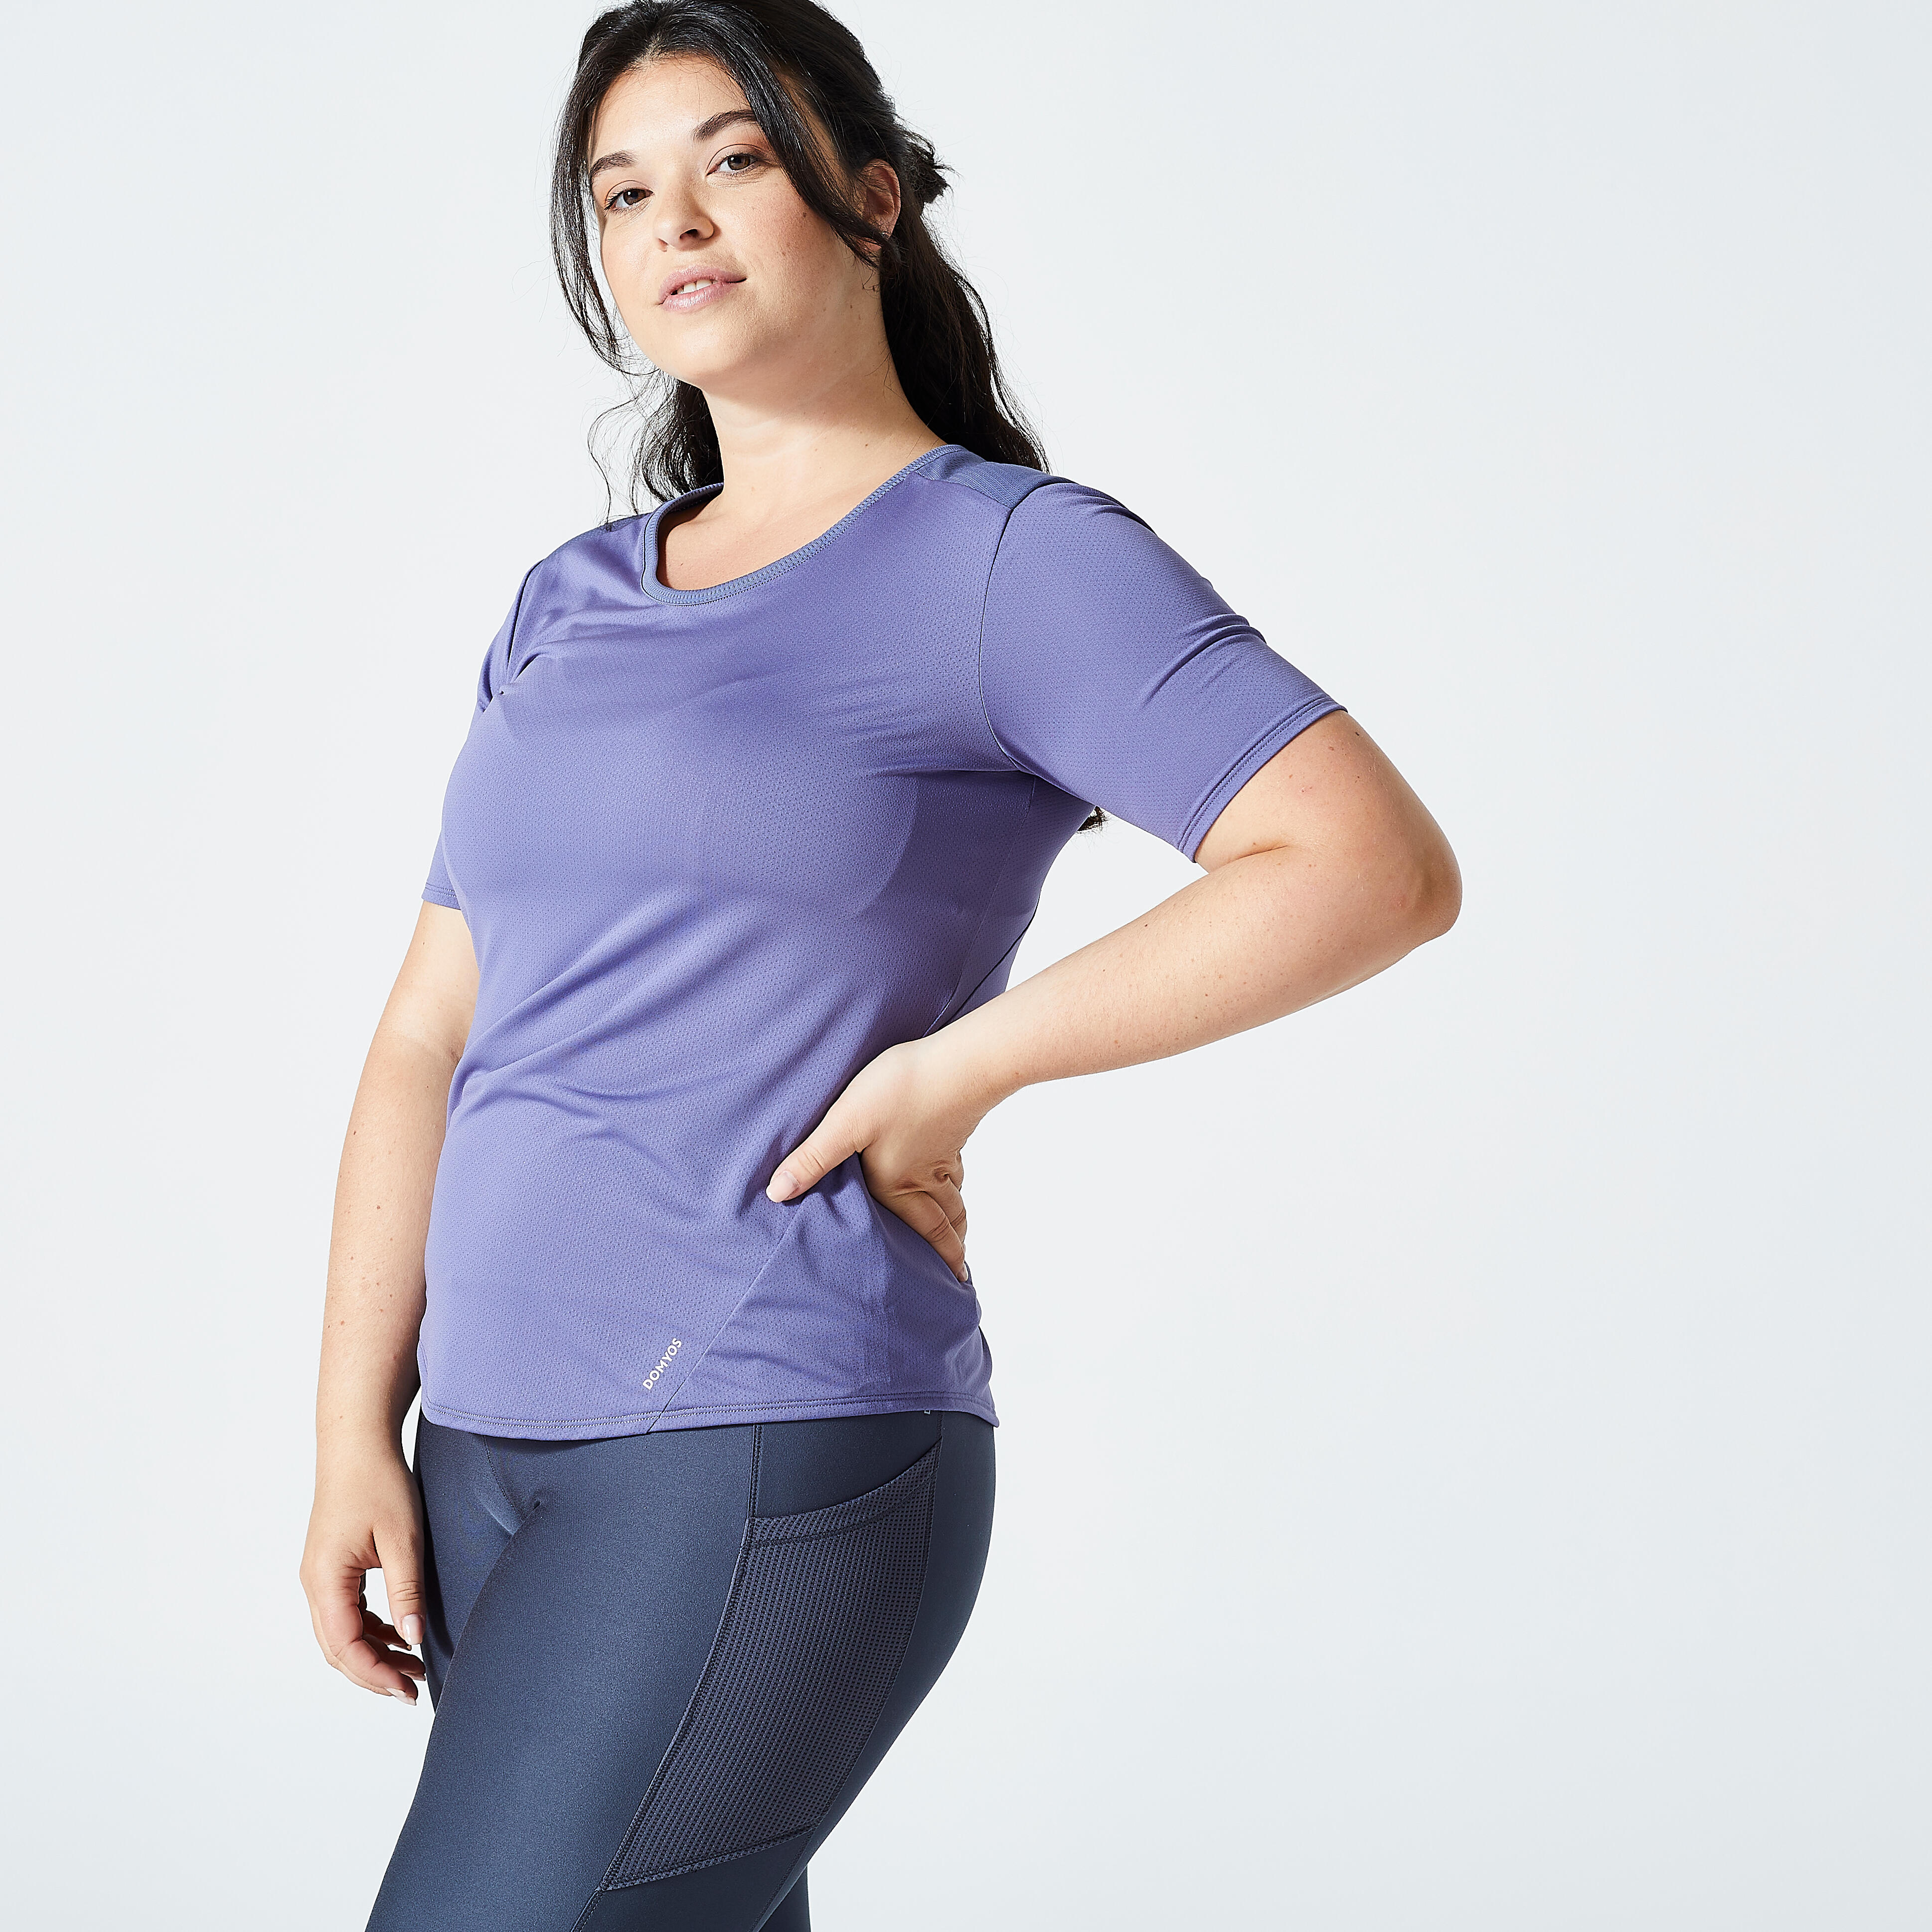 Decathlon activewear / yoga shirt (XL), Women's Fashion, Activewear on  Carousell